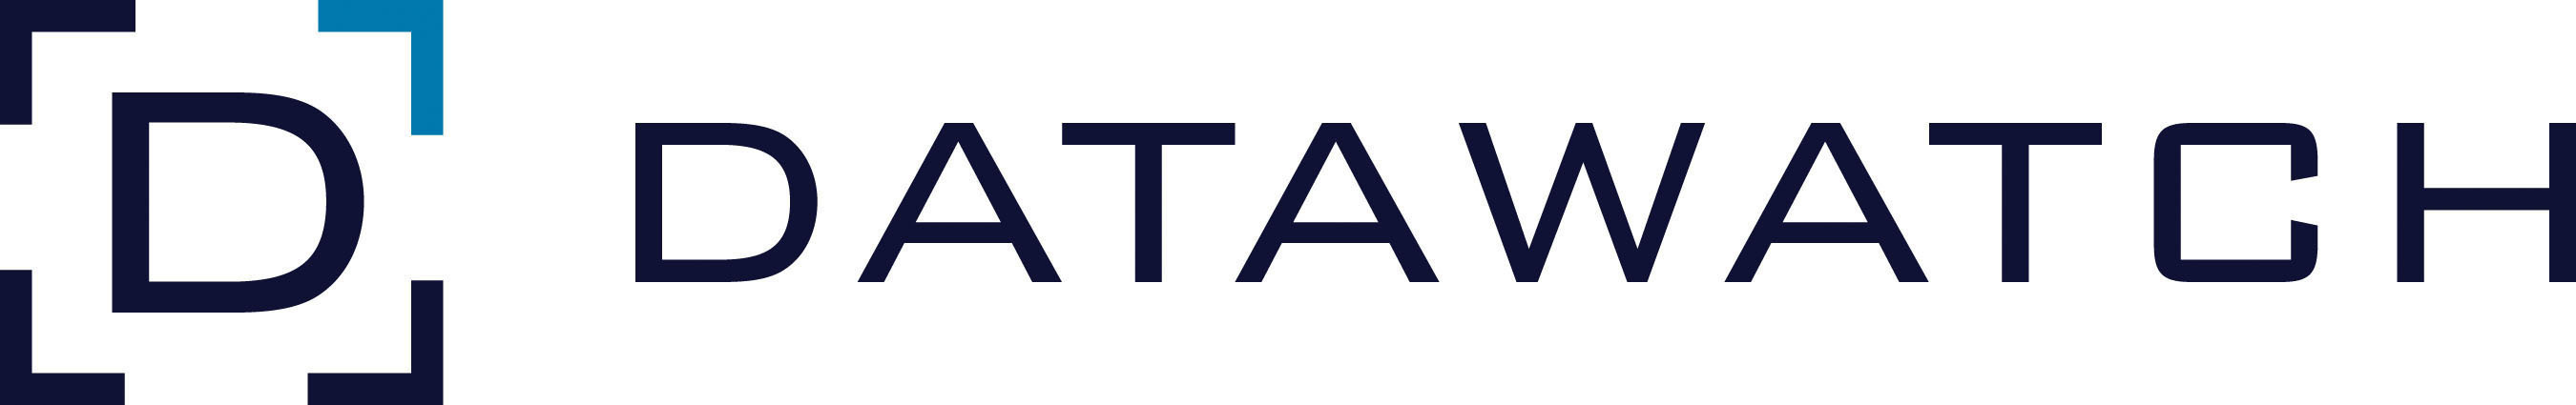 Datawatch logo.